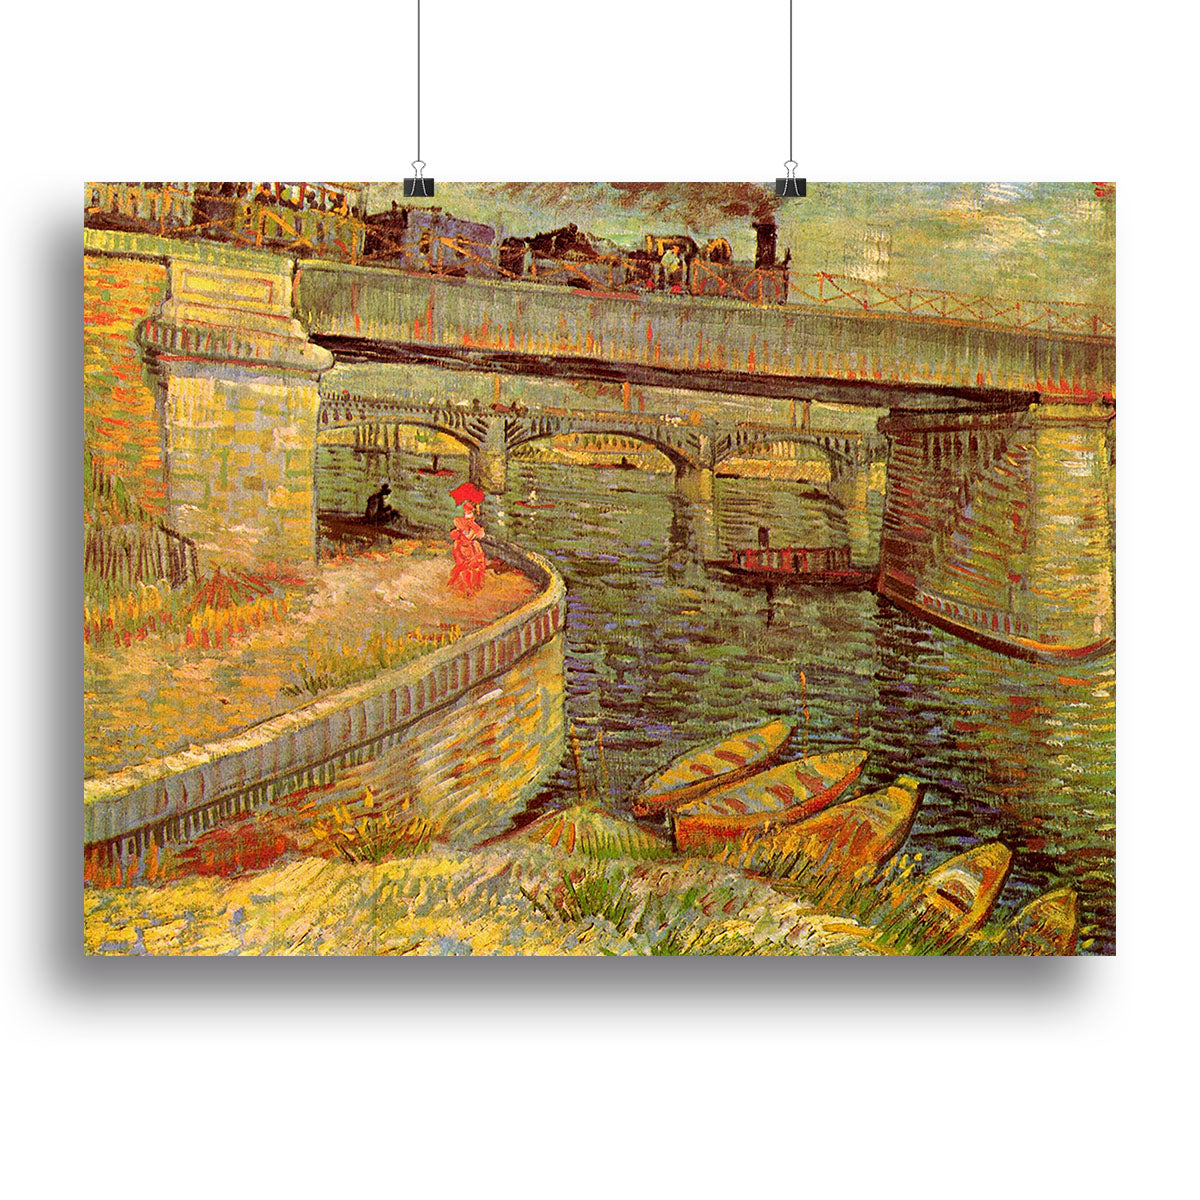 Bridges across the Seine at Asnieres by Van Gogh Canvas Print or Poster - Canvas Art Rocks - 2